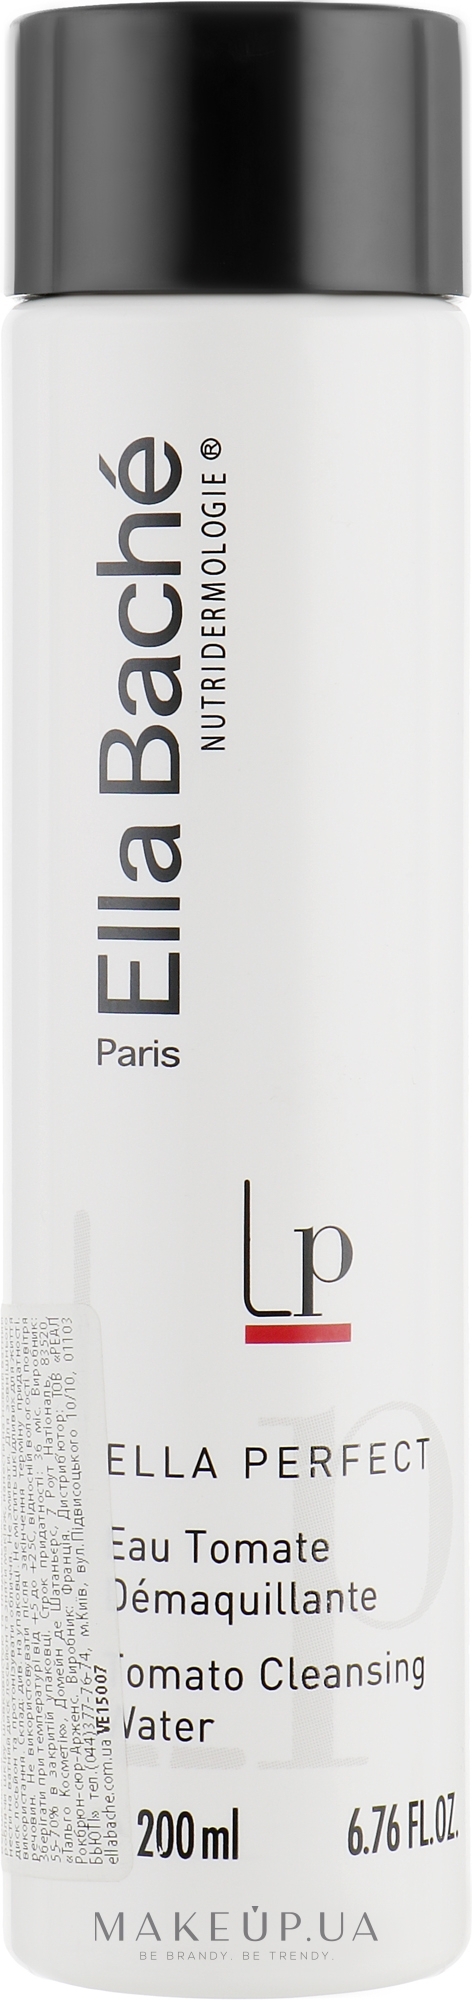 Томат-Мицеллярная вода для очищения лица и век - Ella Bache Ella Perfect Makeup Removal L'Eau Tomate Demaquillante — фото 200ml